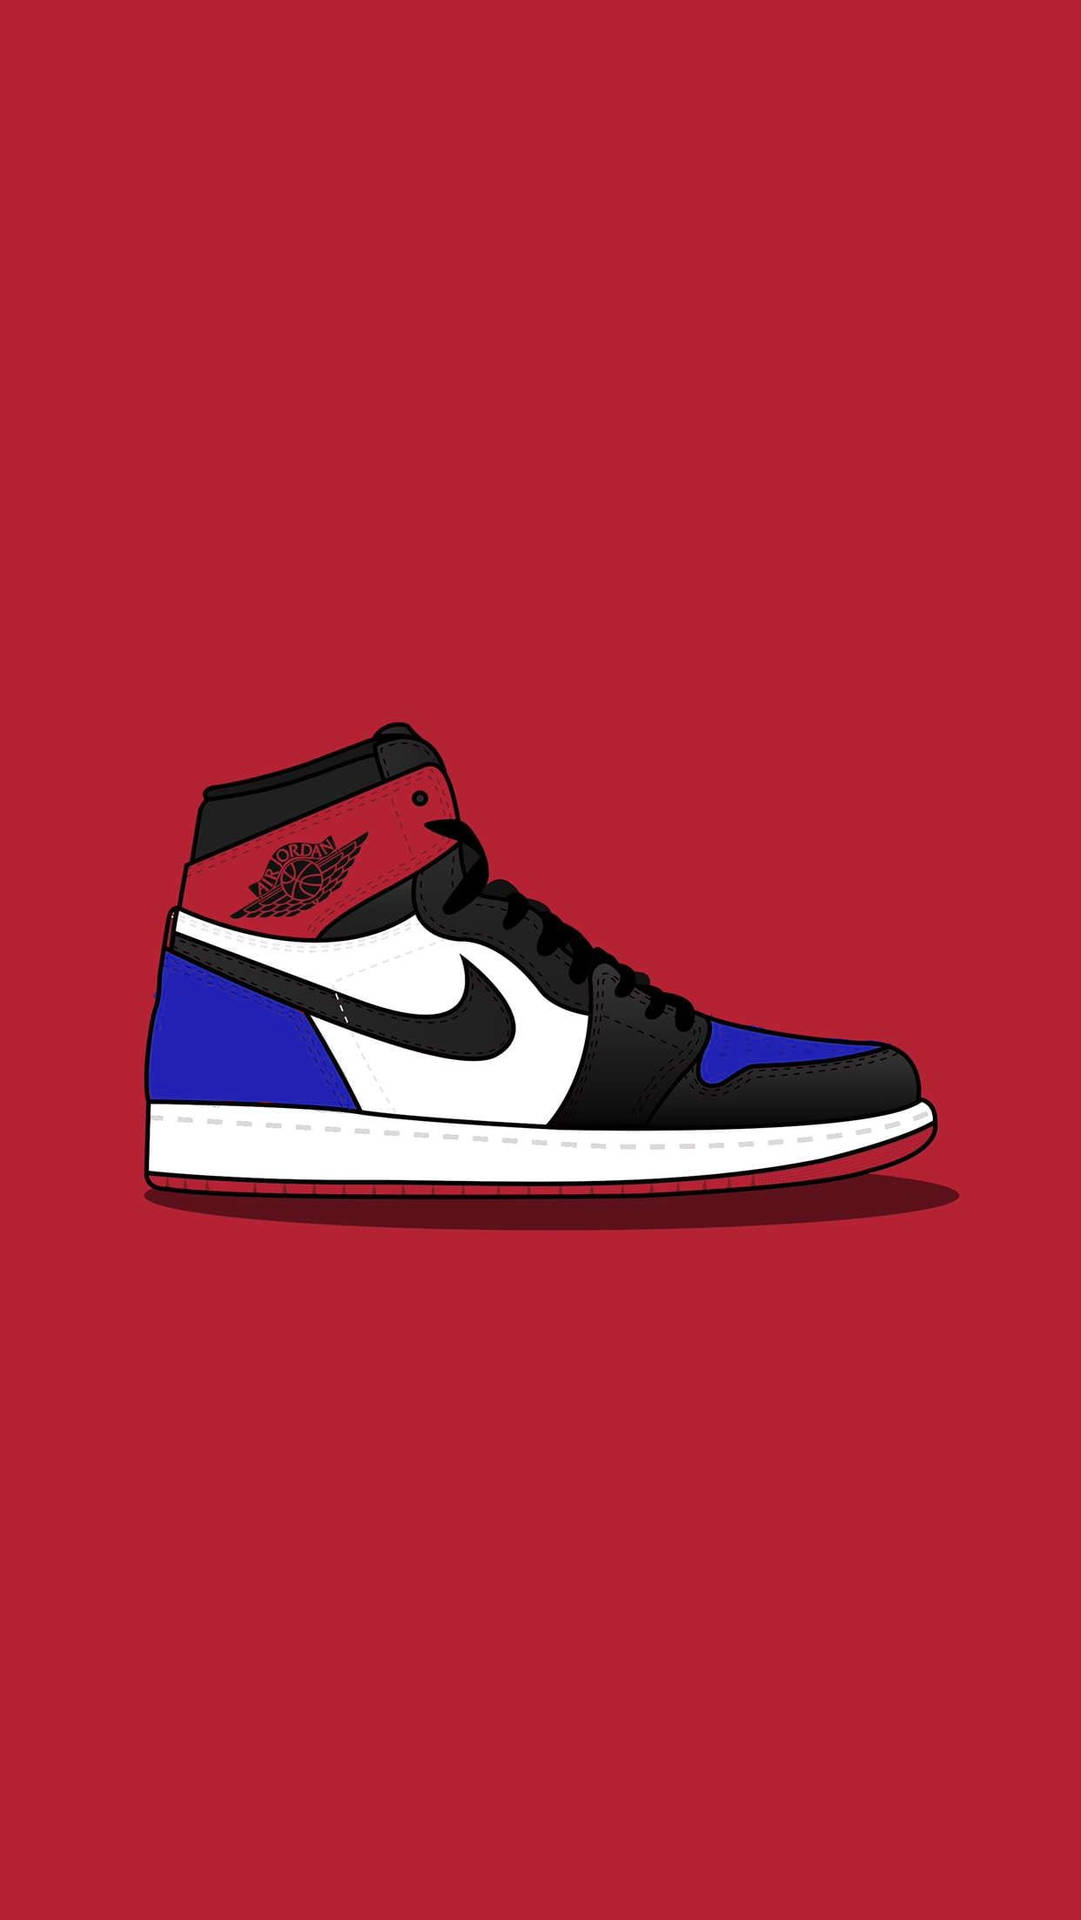 Retro High Cartoon Nike Shoes Background